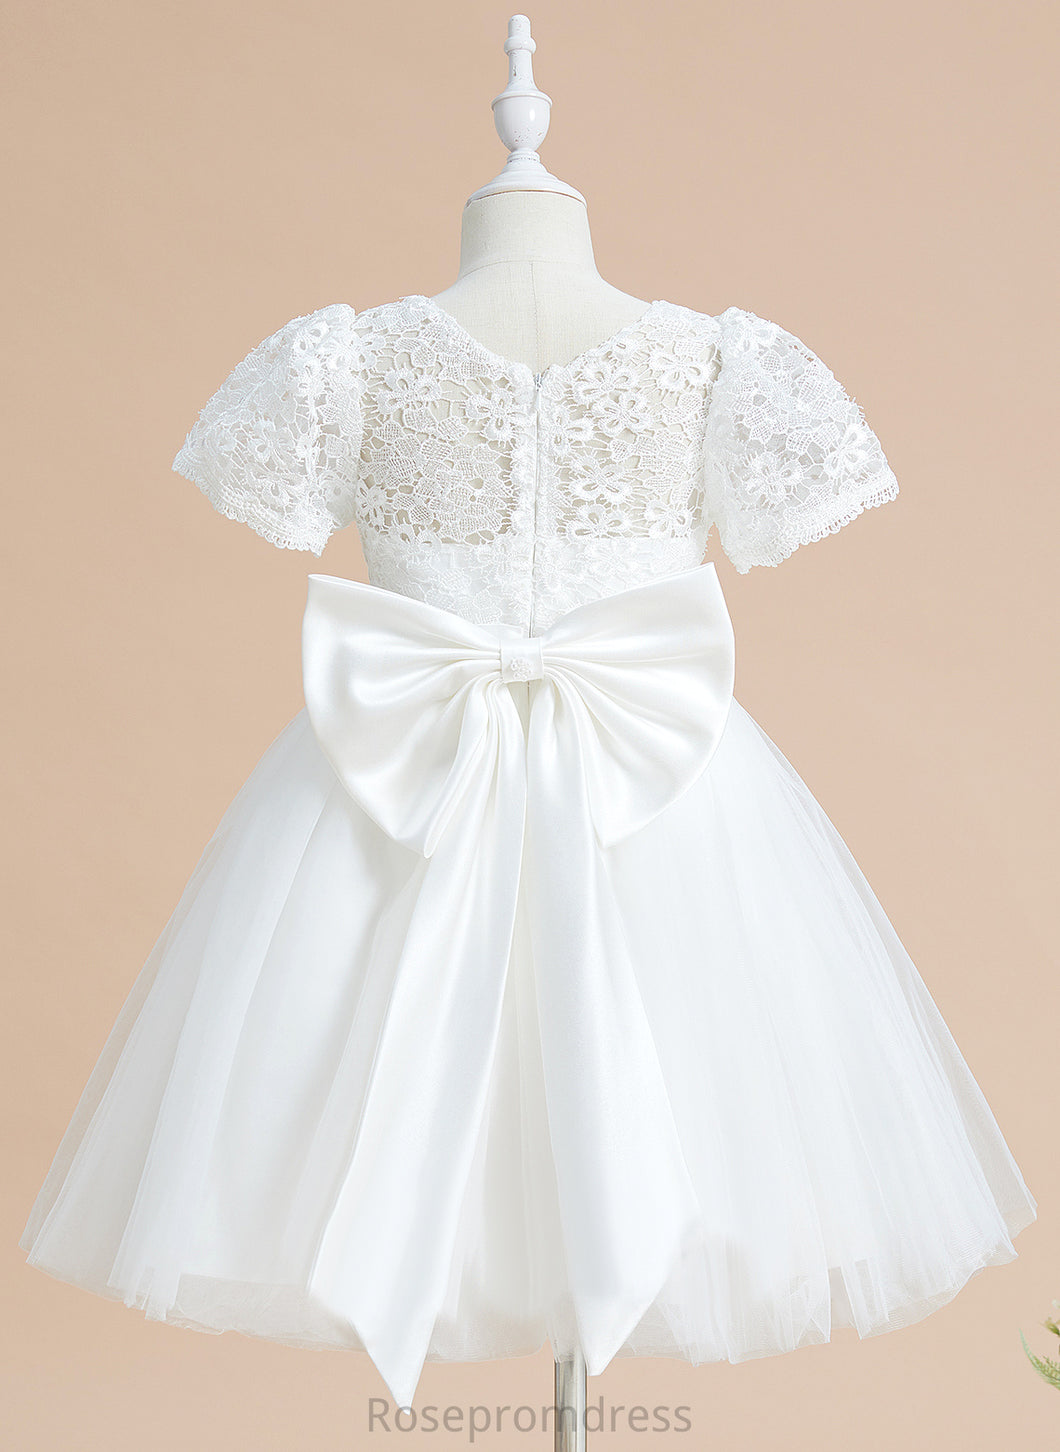 - Short Anastasia Girl Tulle/Lace Dress Flower Bow(s) With A-Line Knee-length Scoop Sleeves Neck Flower Girl Dresses